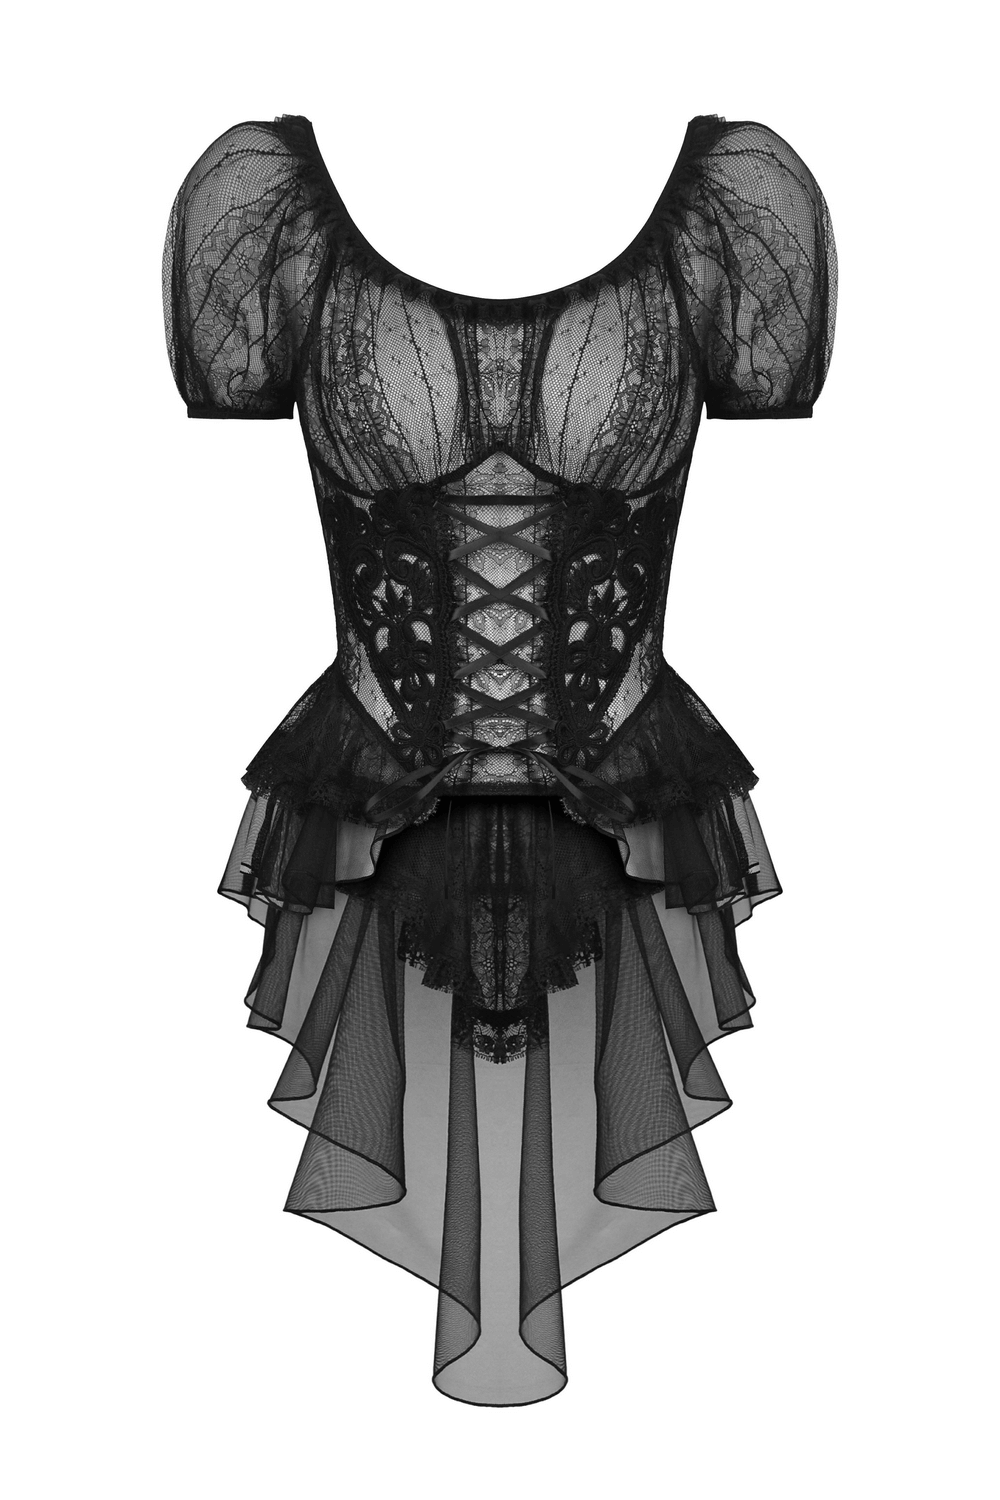 Top gótico femenino de encaje negro transparente con mangas abullonadas